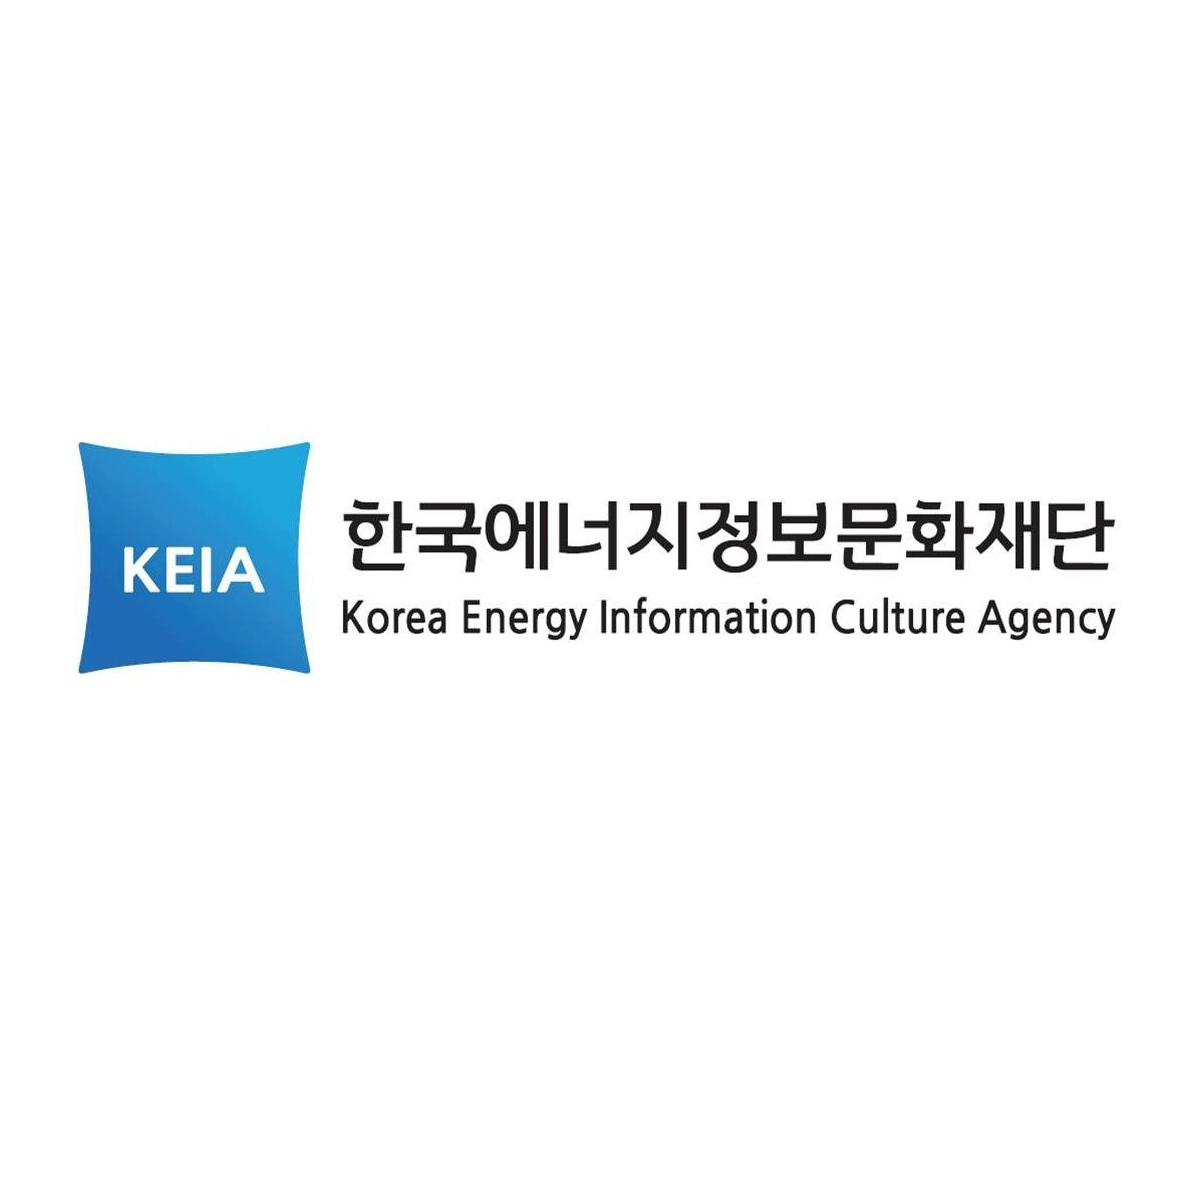 Korea Energy Information Culture Agency